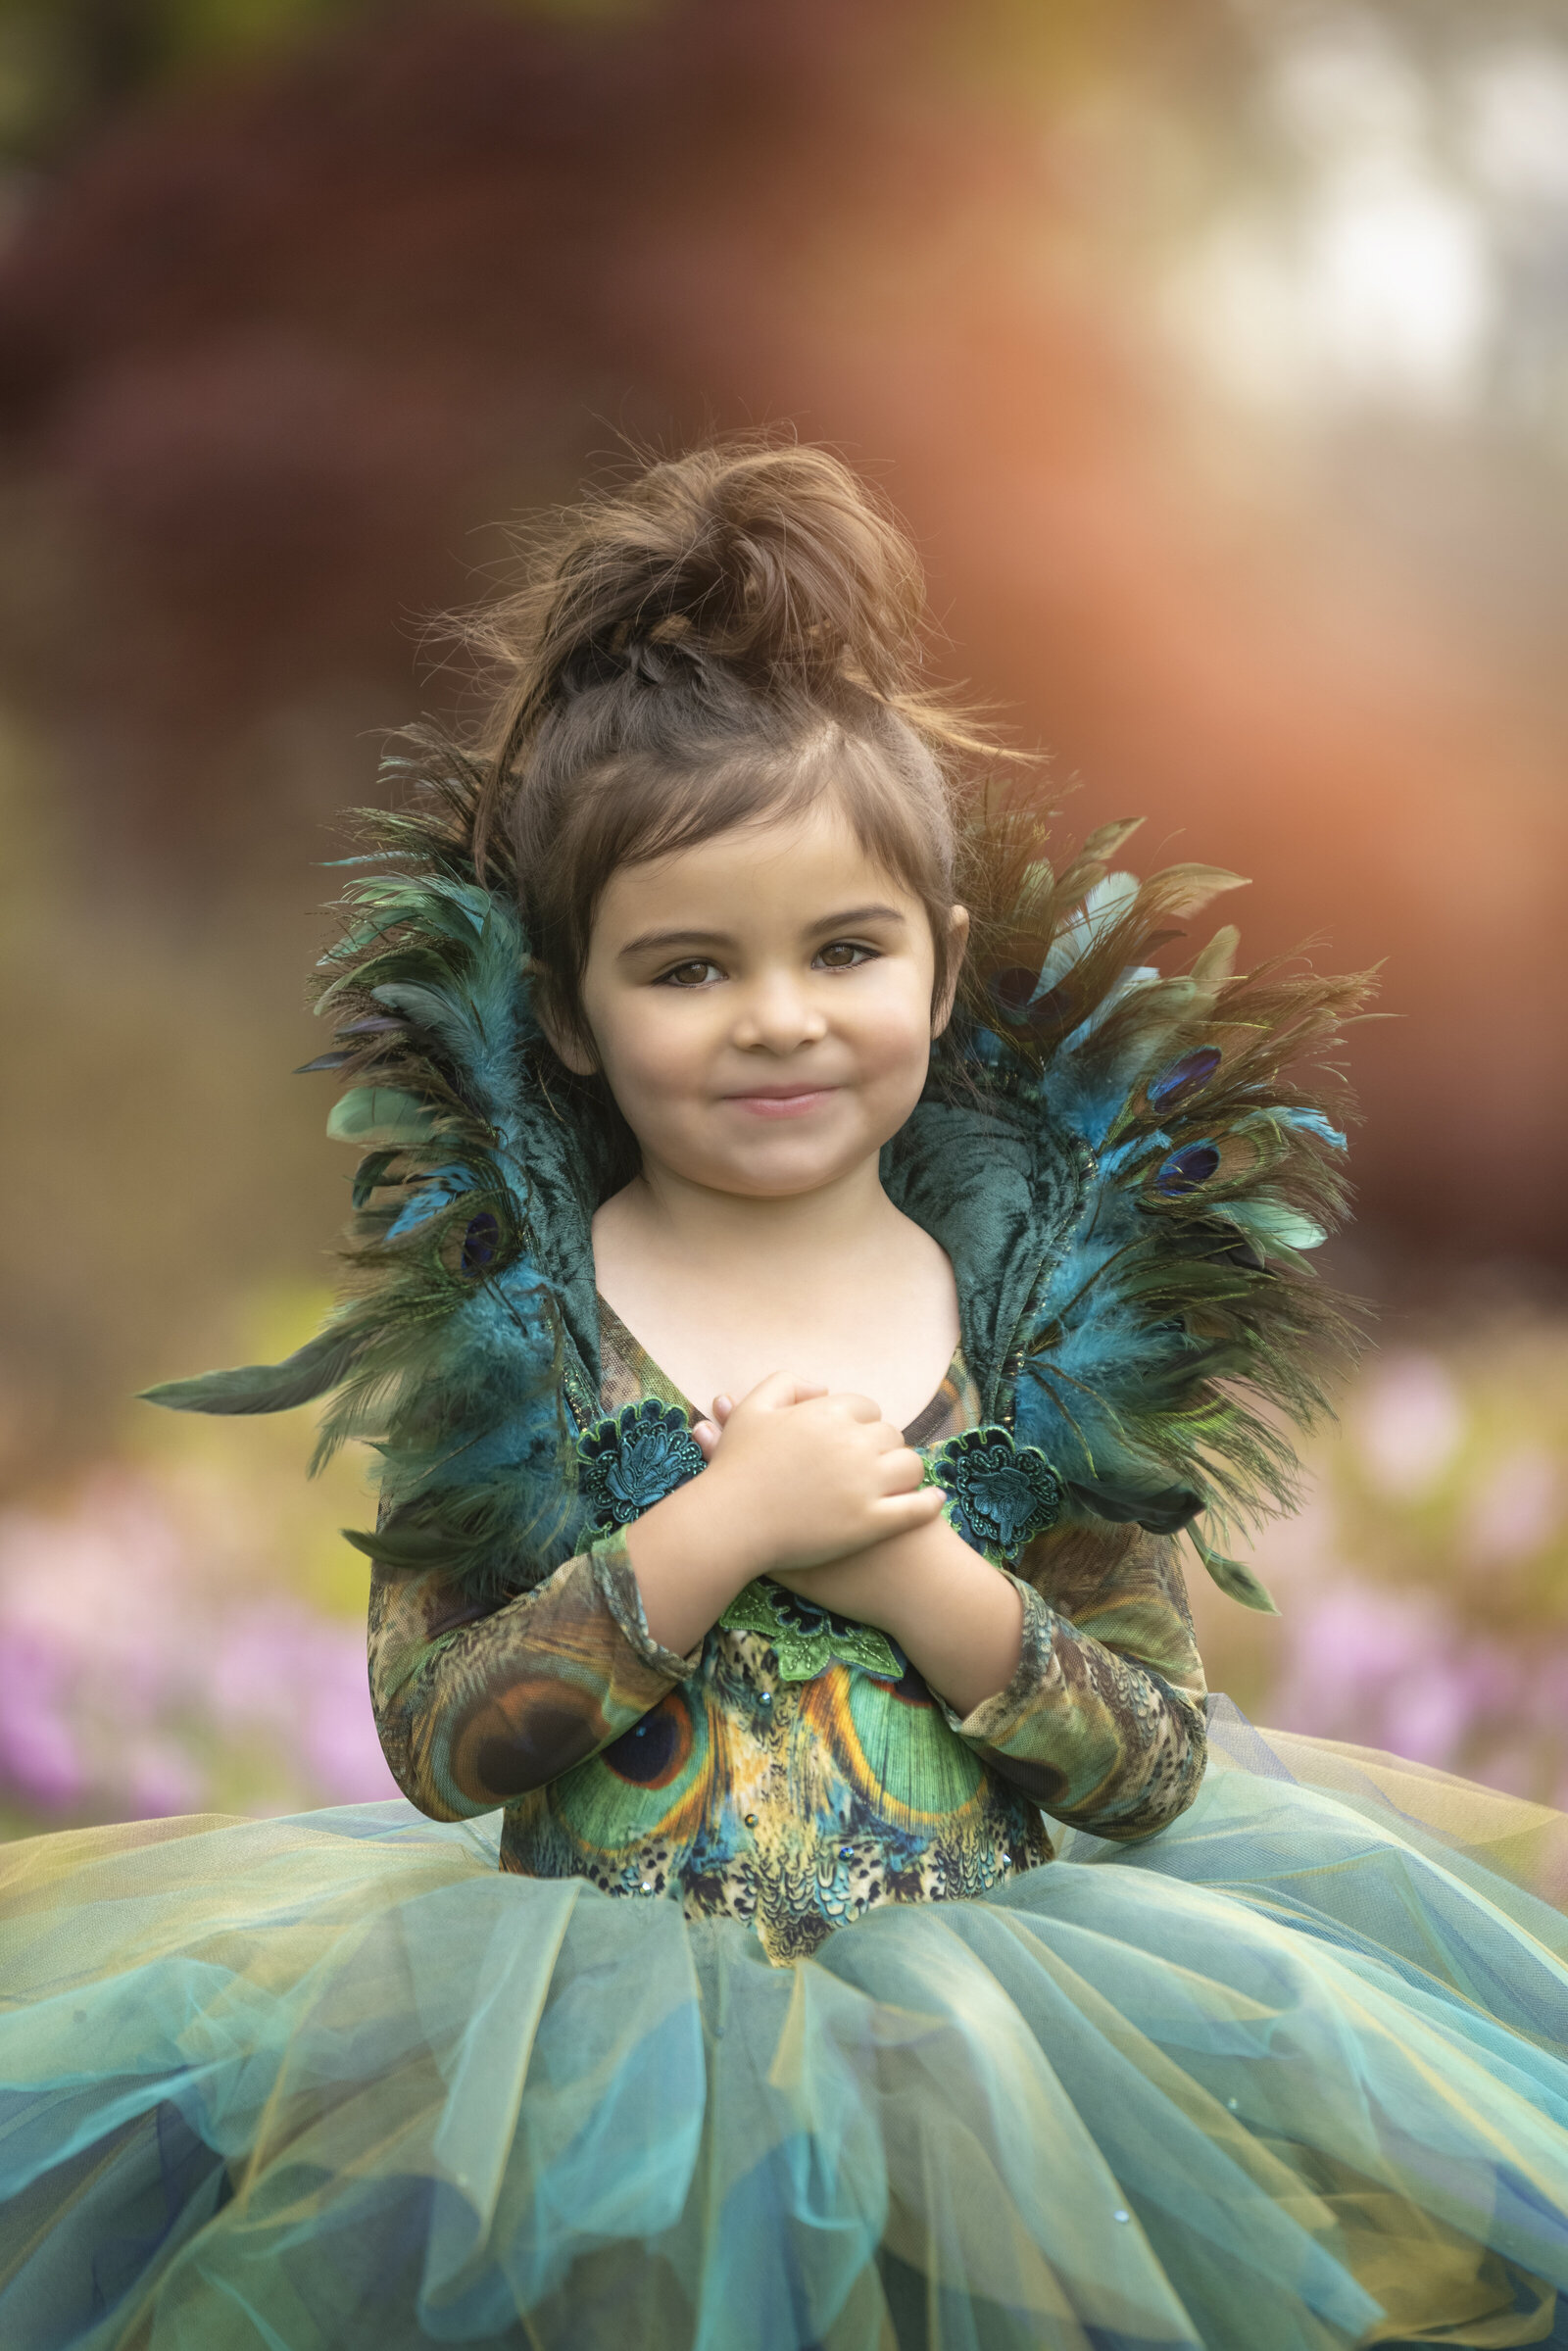 Young girl in peacock dress at Dallas Arboretum